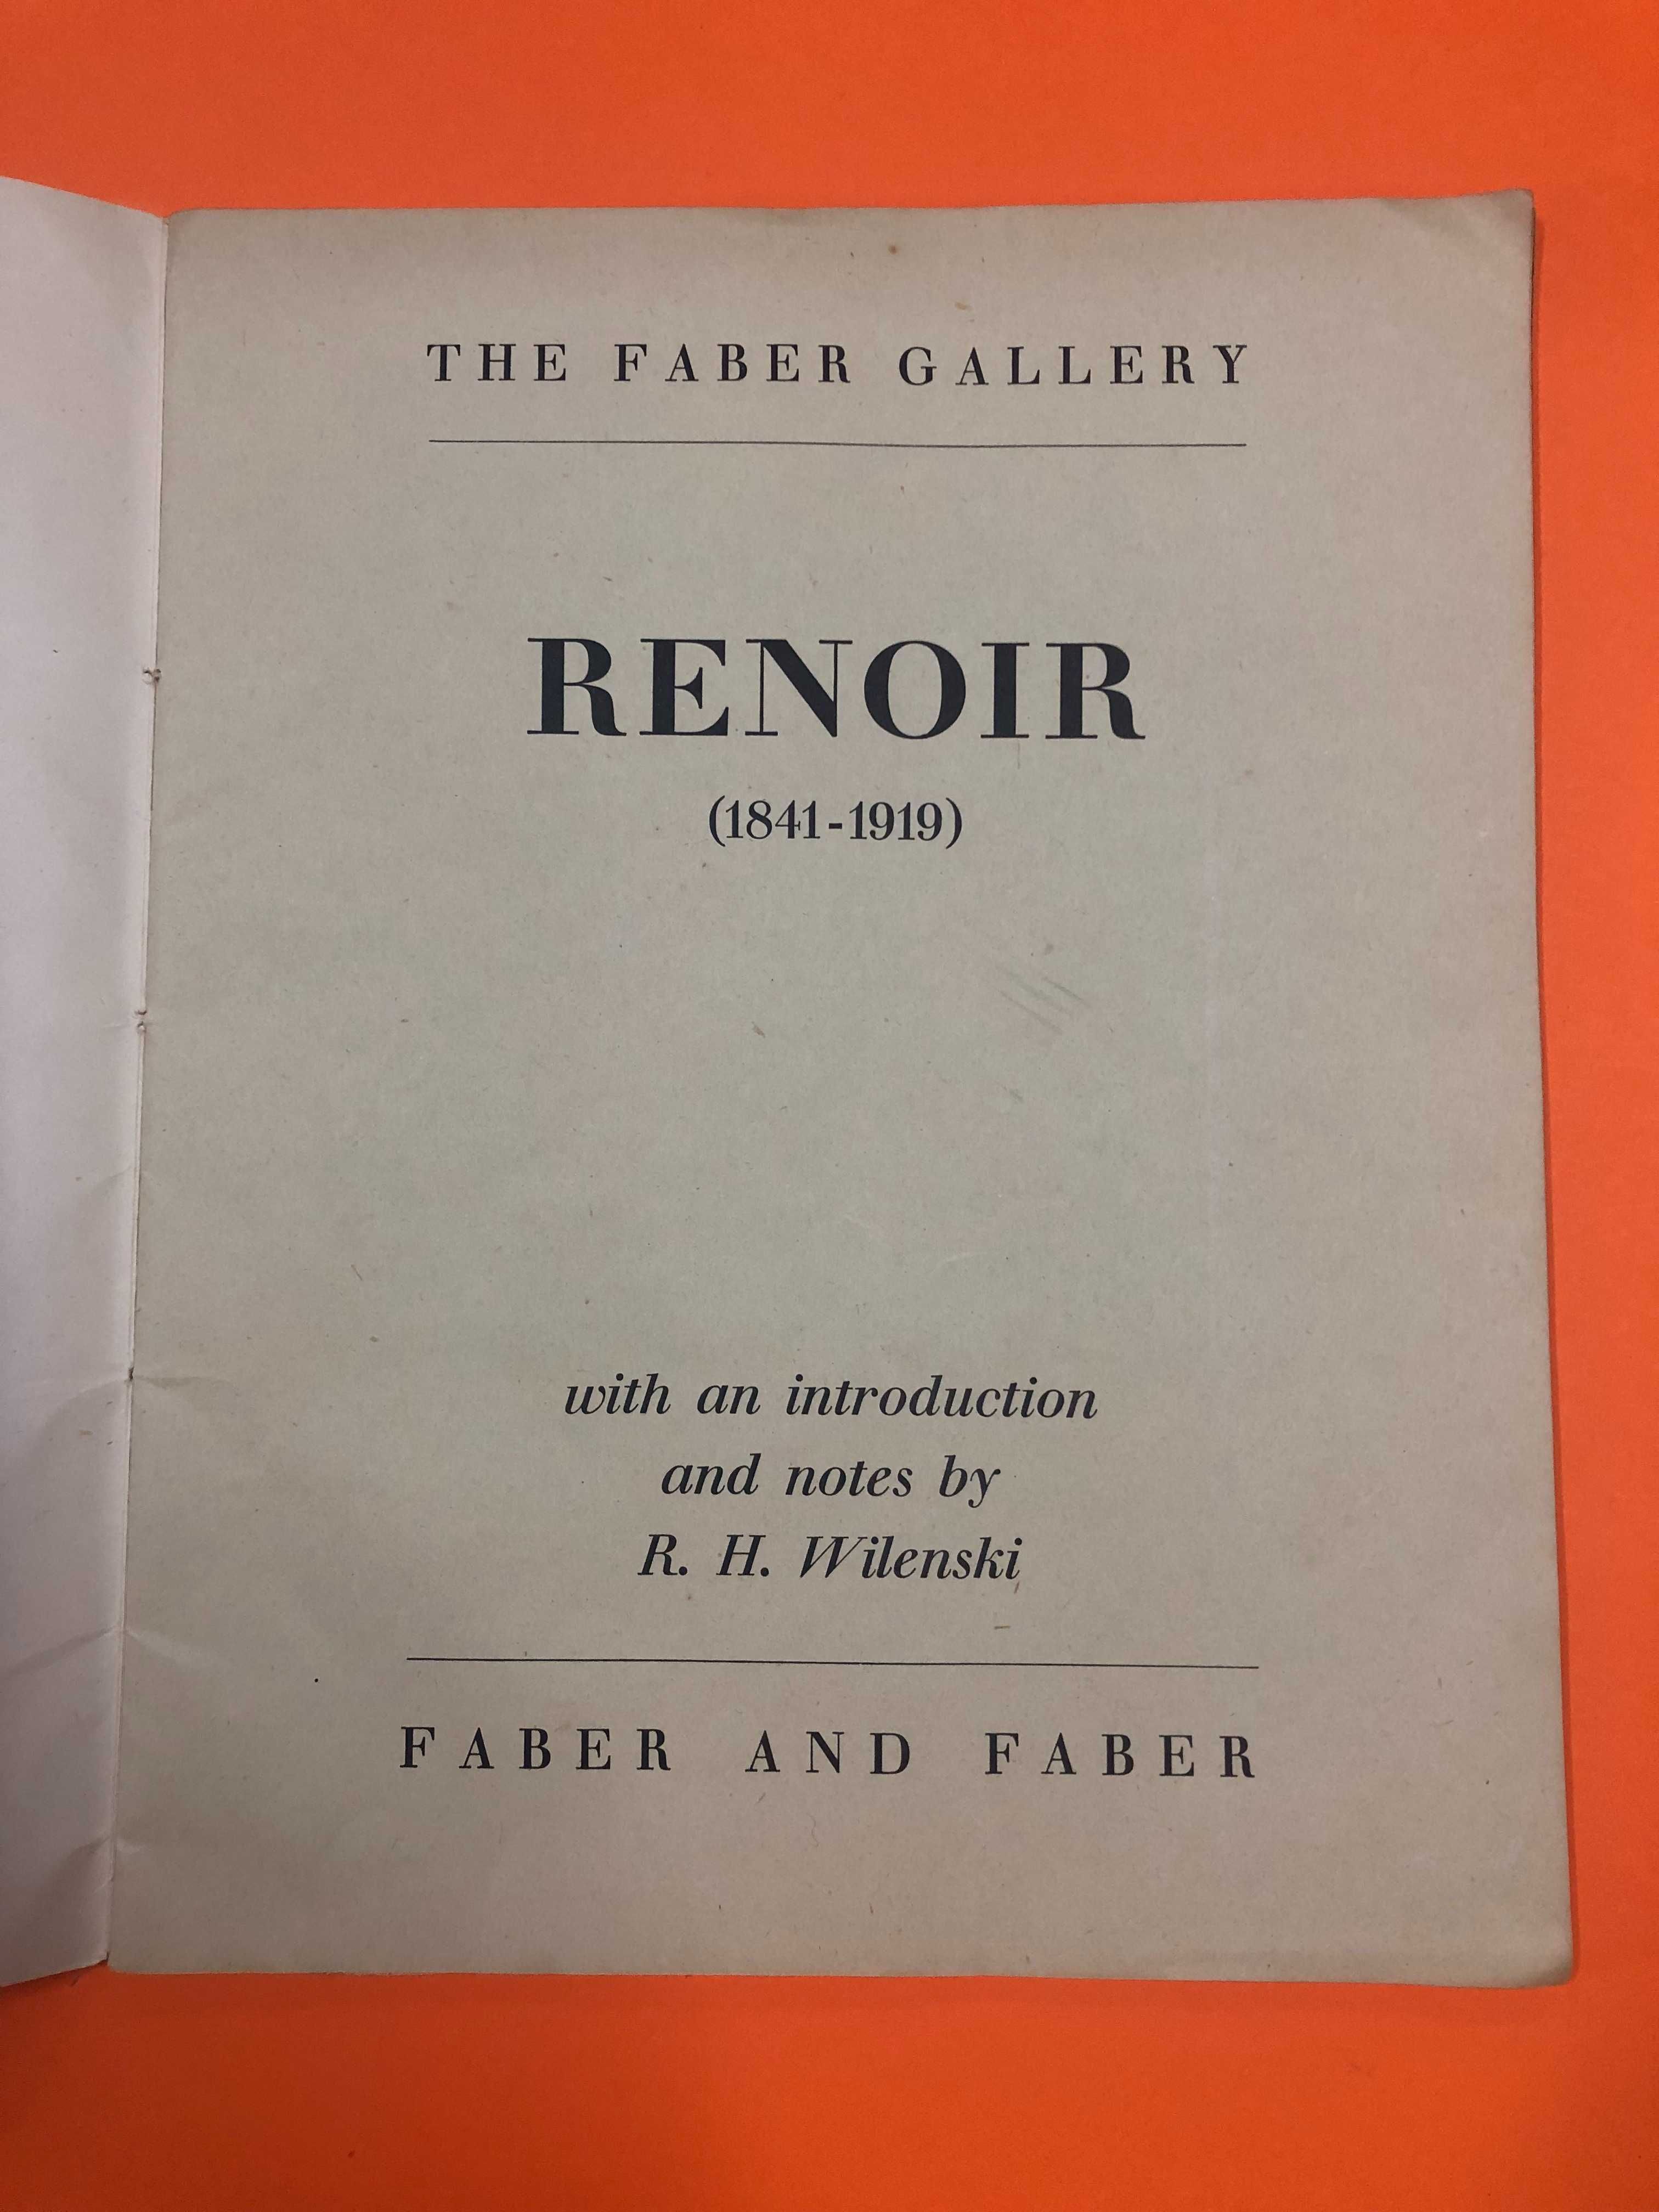 RENOIR – Portfolio- The Faber Gallery- R. H. Wilenski - Faber & Faber